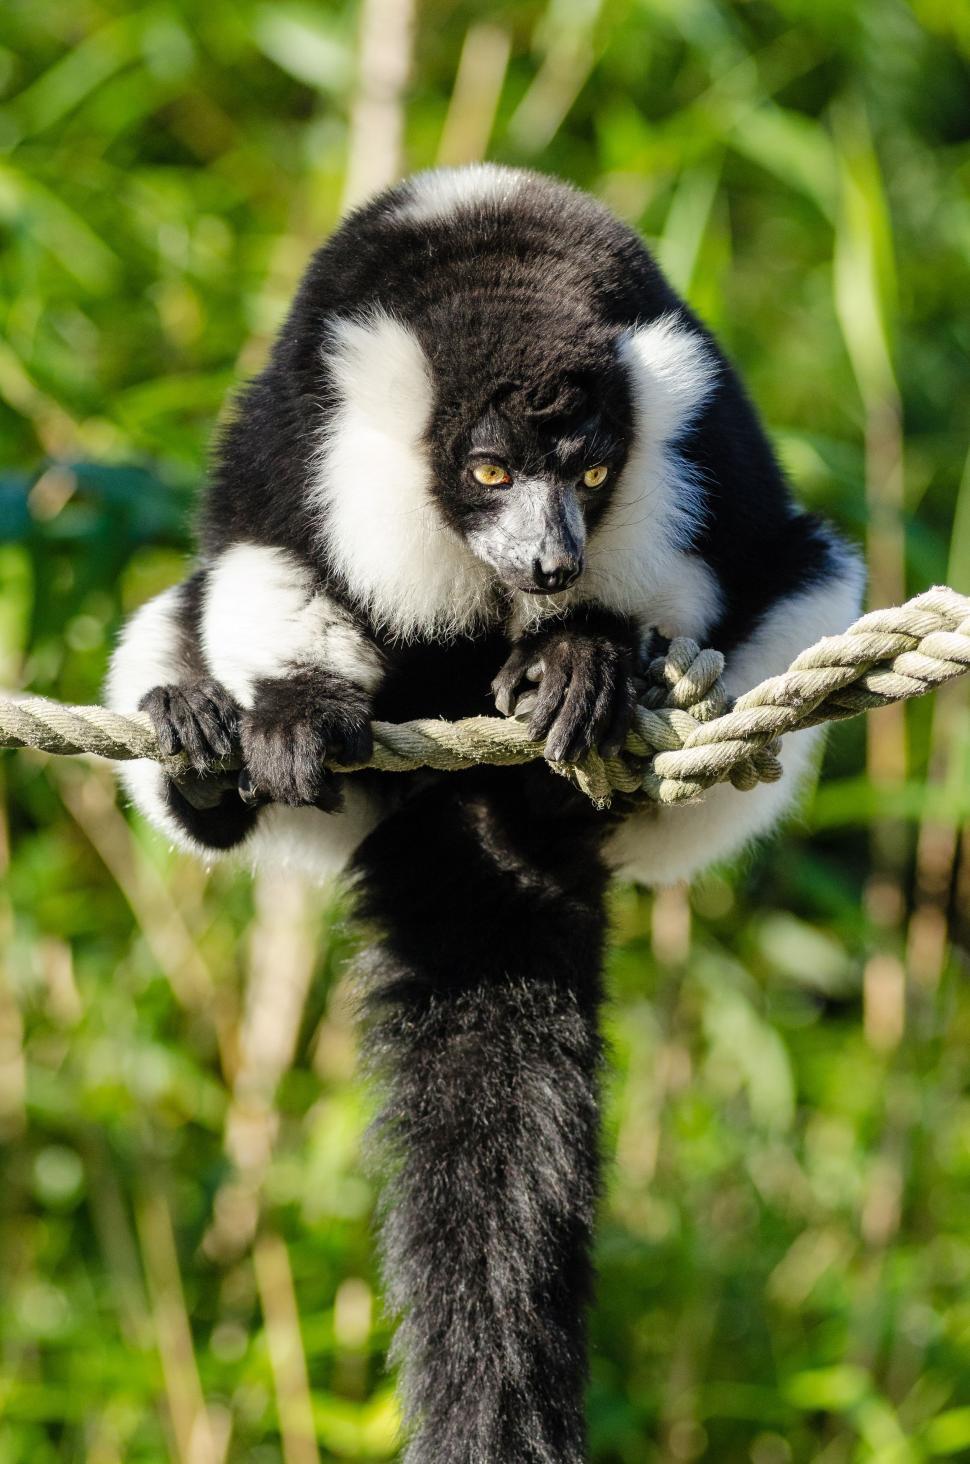 Free Image of Ruffed lemur on rope  